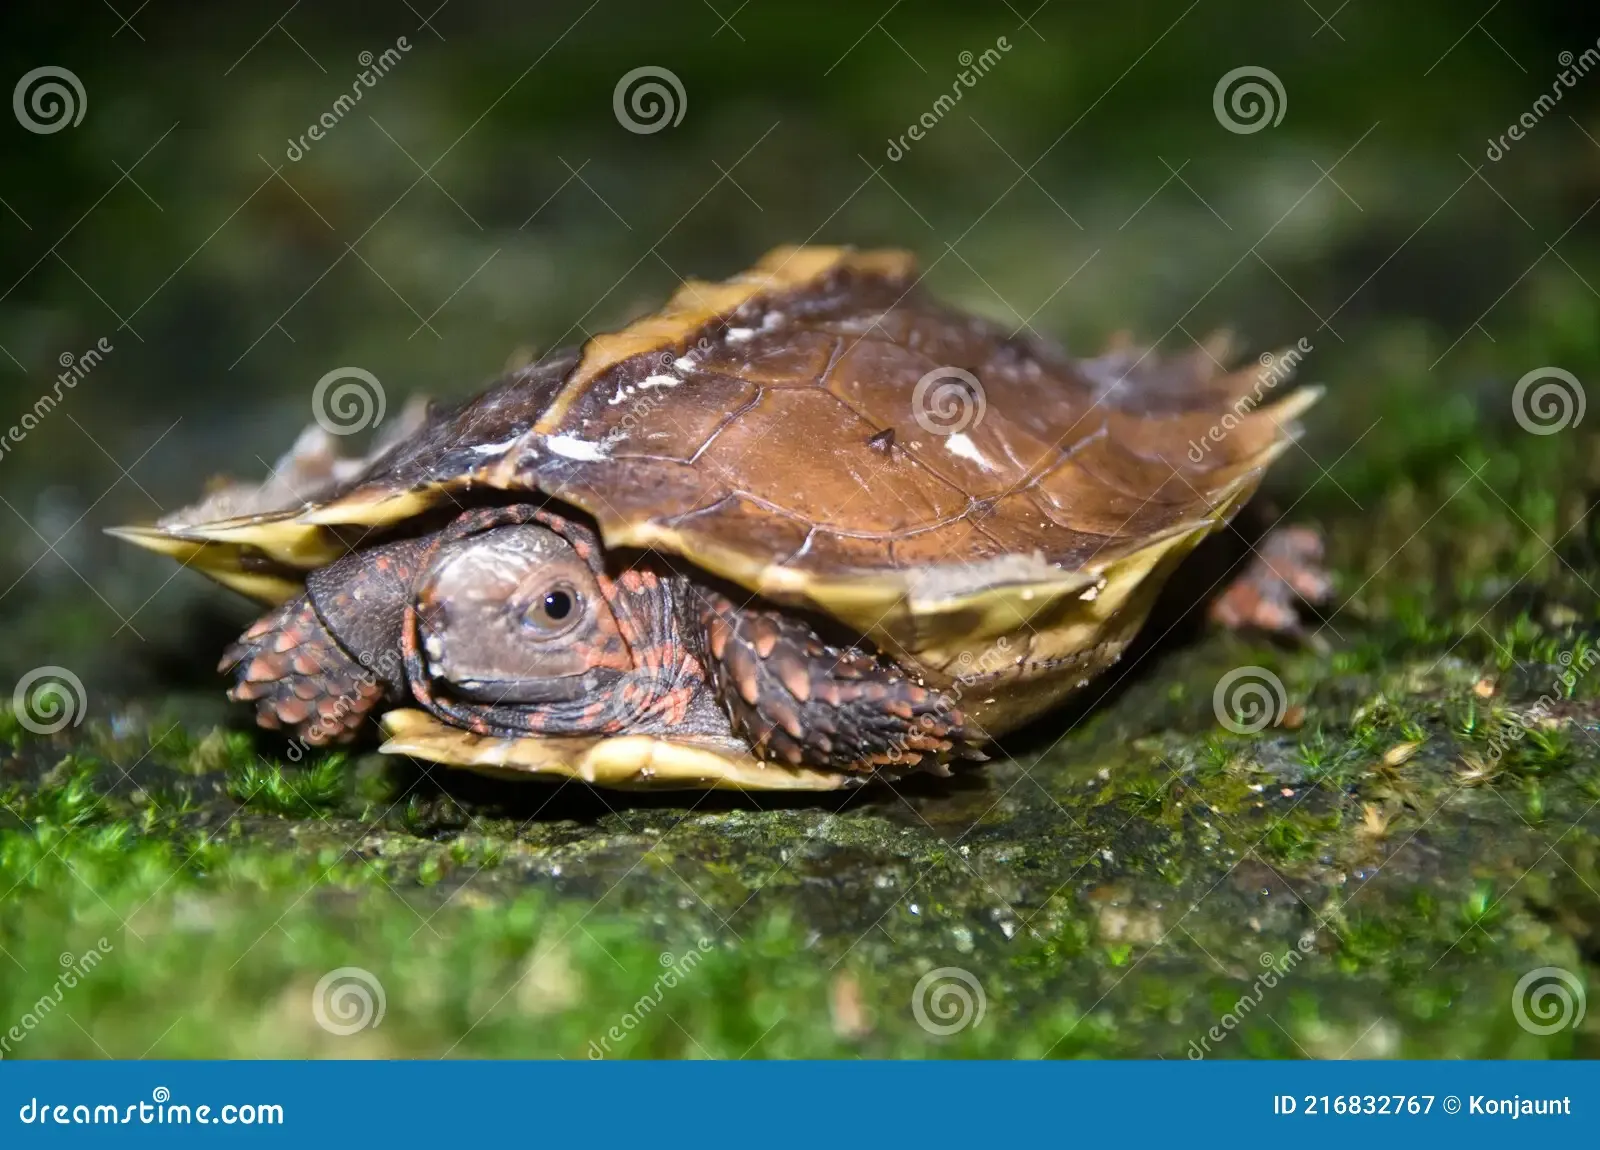 spiny-turtle-heosemys-spinosa-rock-green-moss-terrapin-cogwheel-wildness-forrest-rain-thailand-216832767.jpg